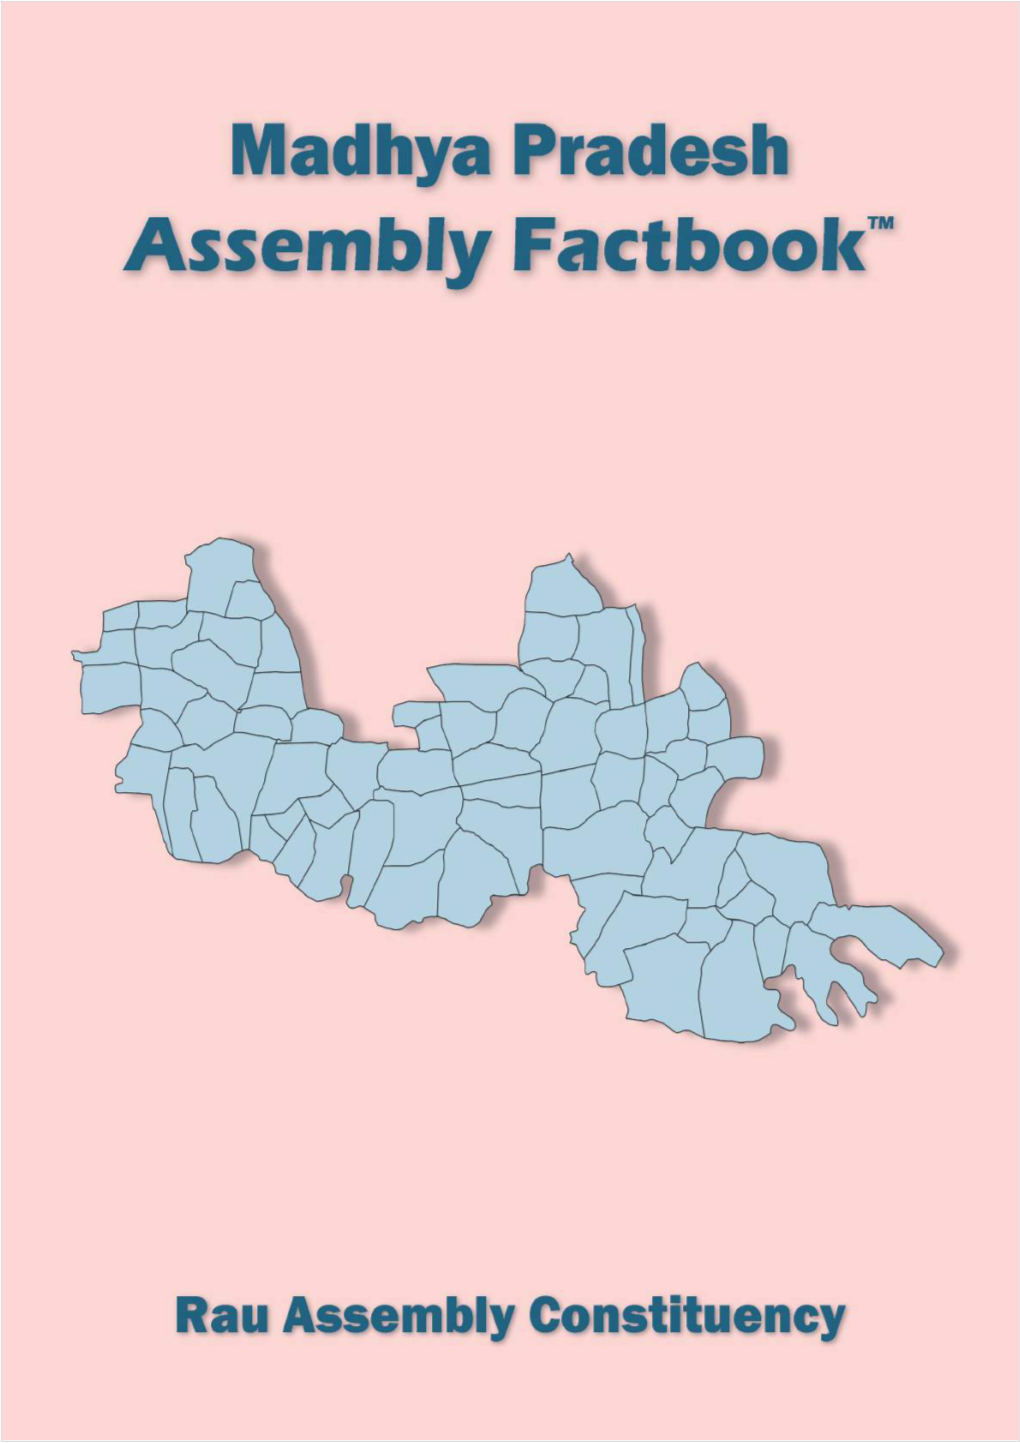 Rau Assembly Madhya Pradesh Factbook